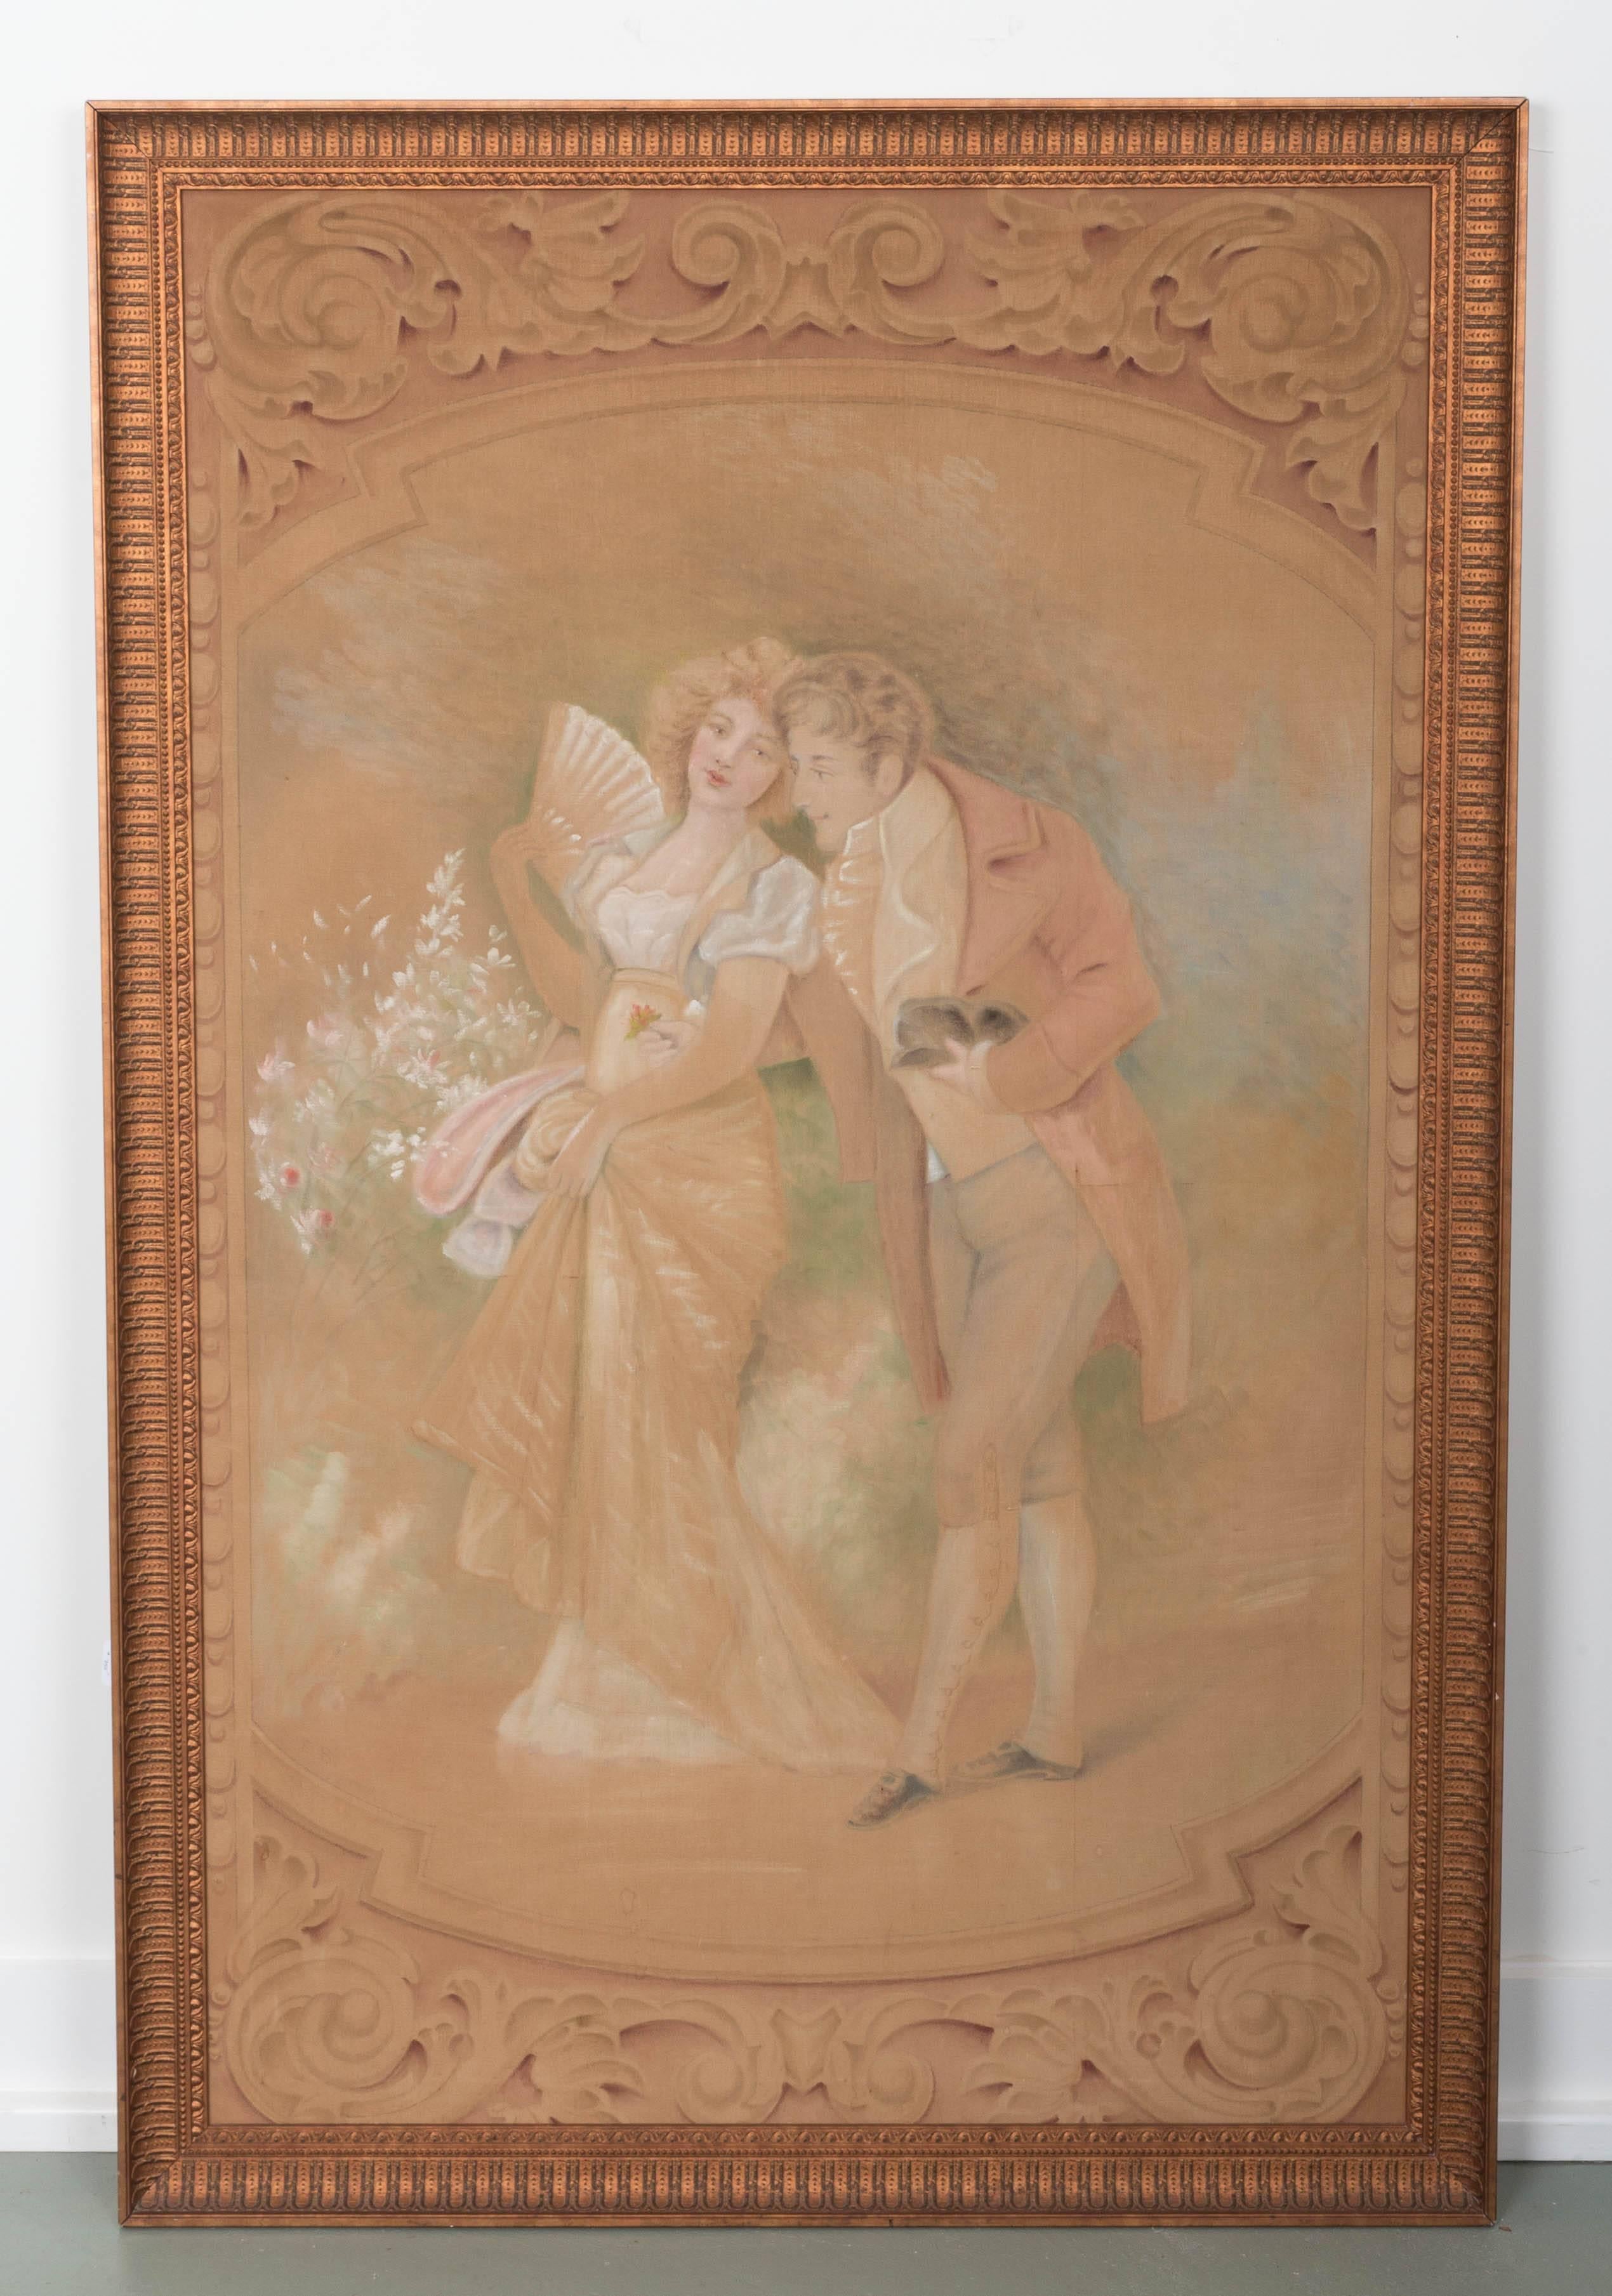 Late 19th century paint on linen romantic couple inside scroll work cartouche.